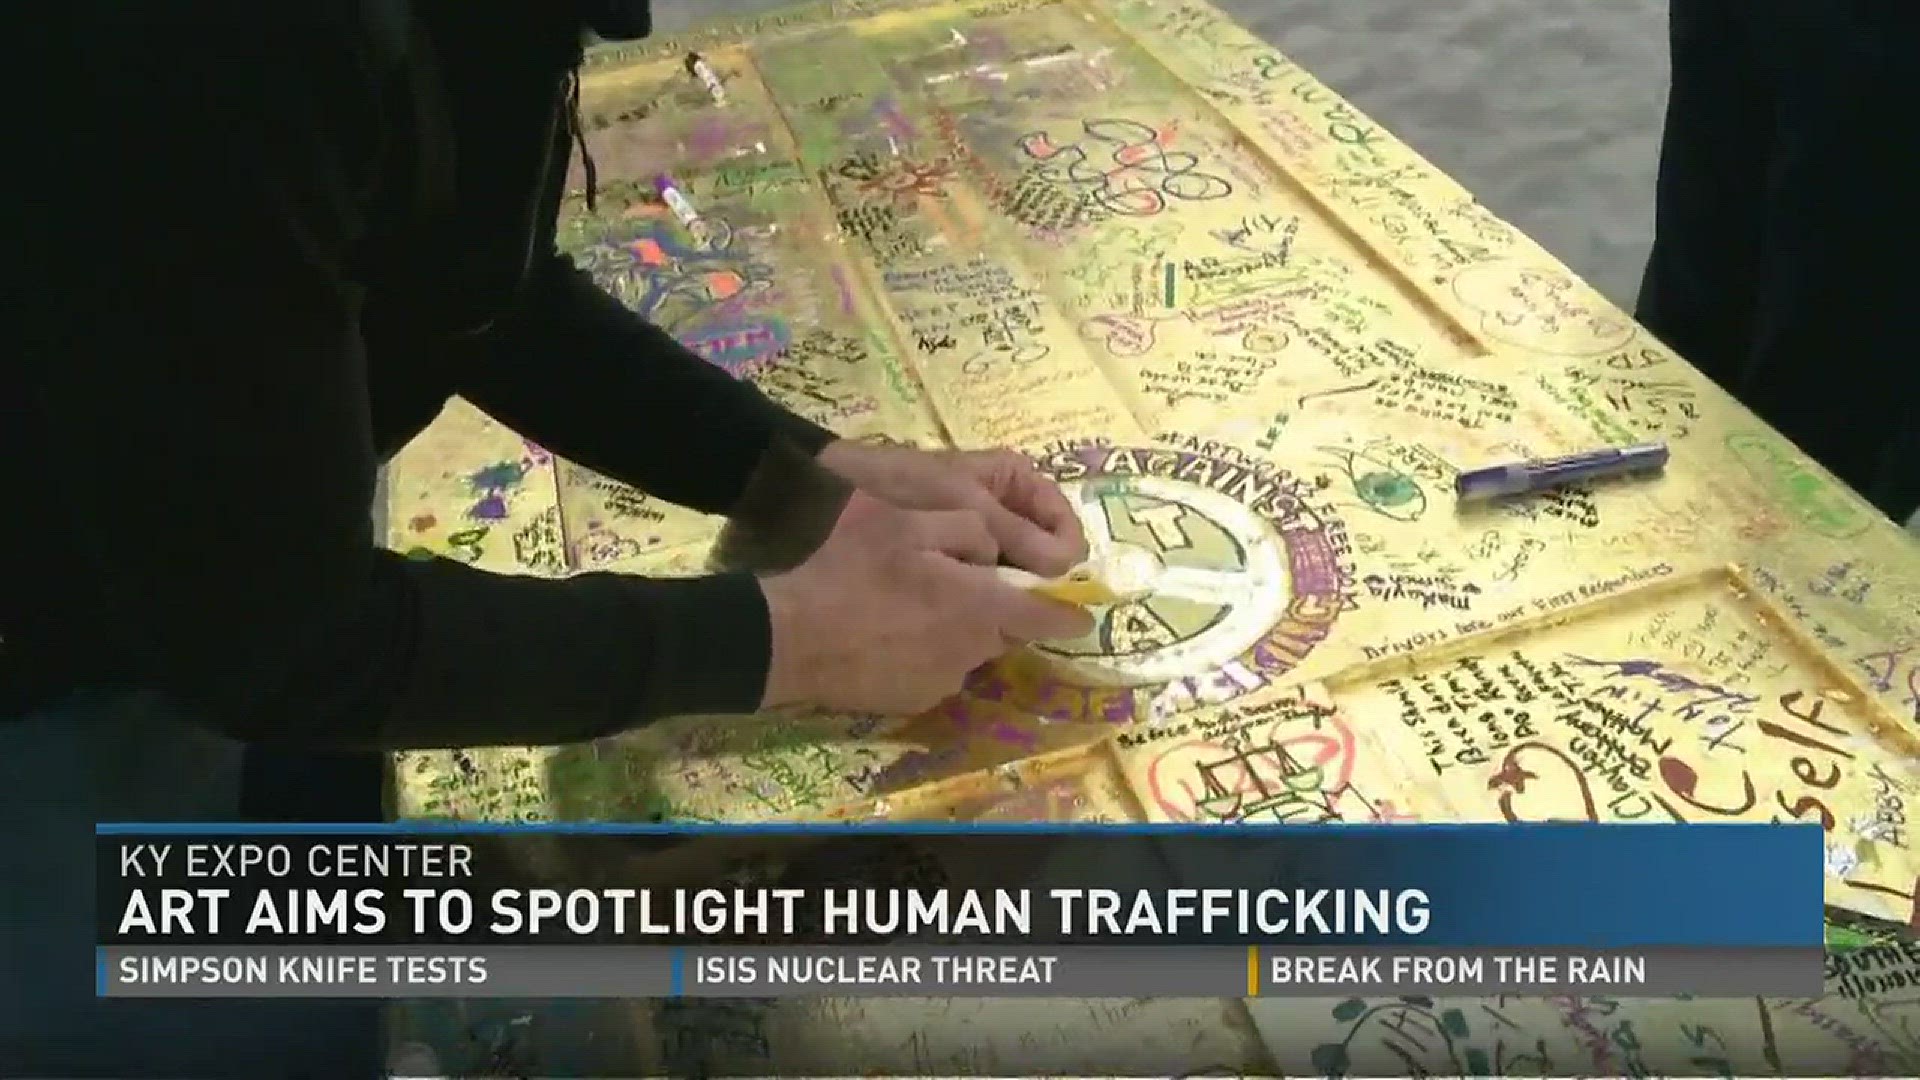 Art aims to spotlight human trafficking